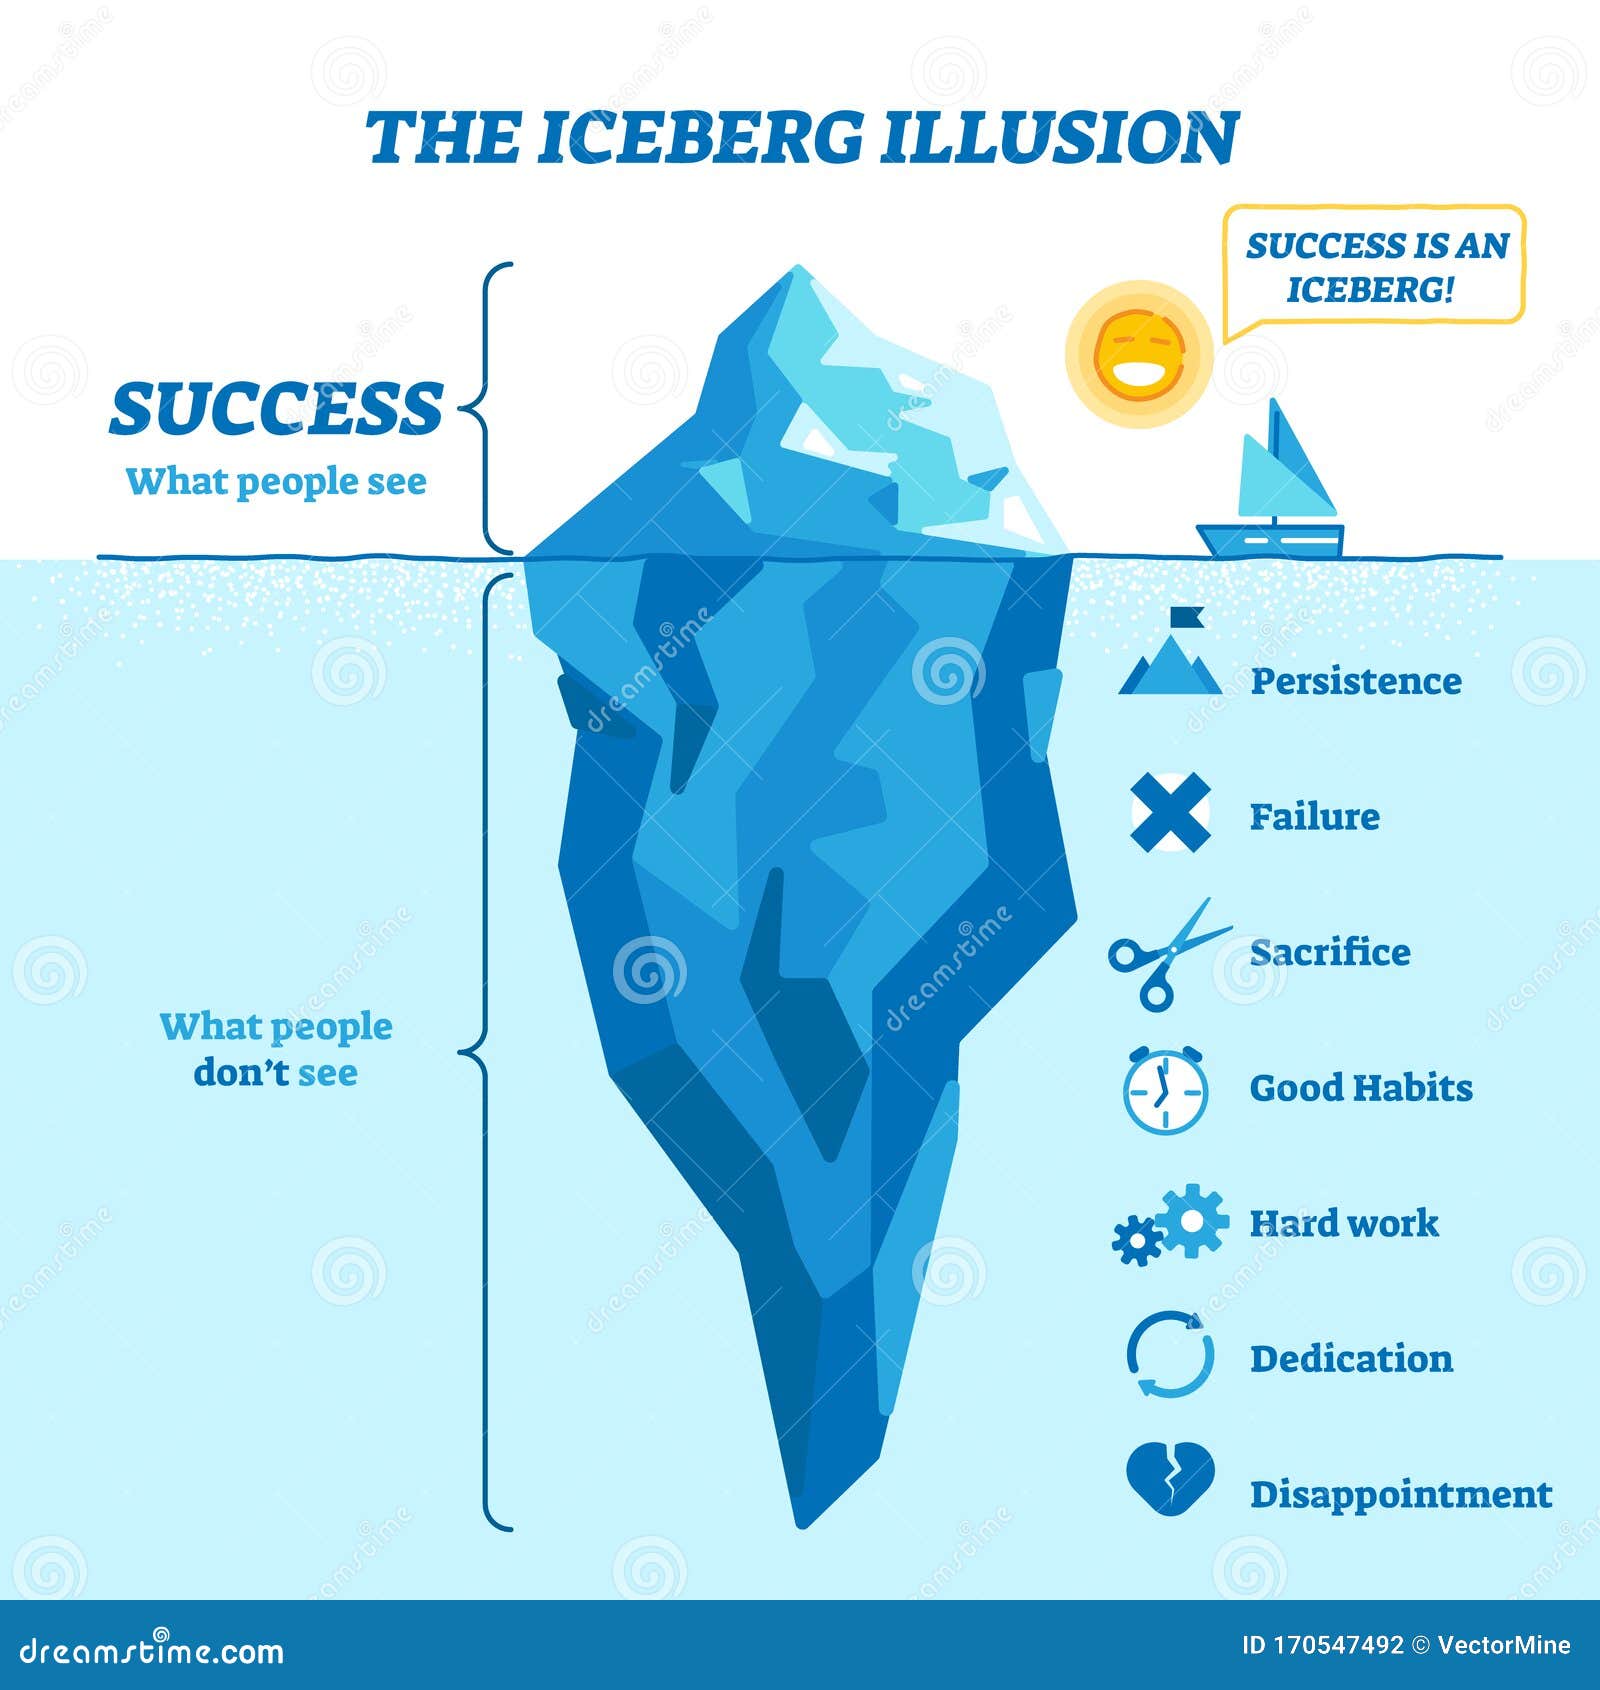 hard games Iceberg